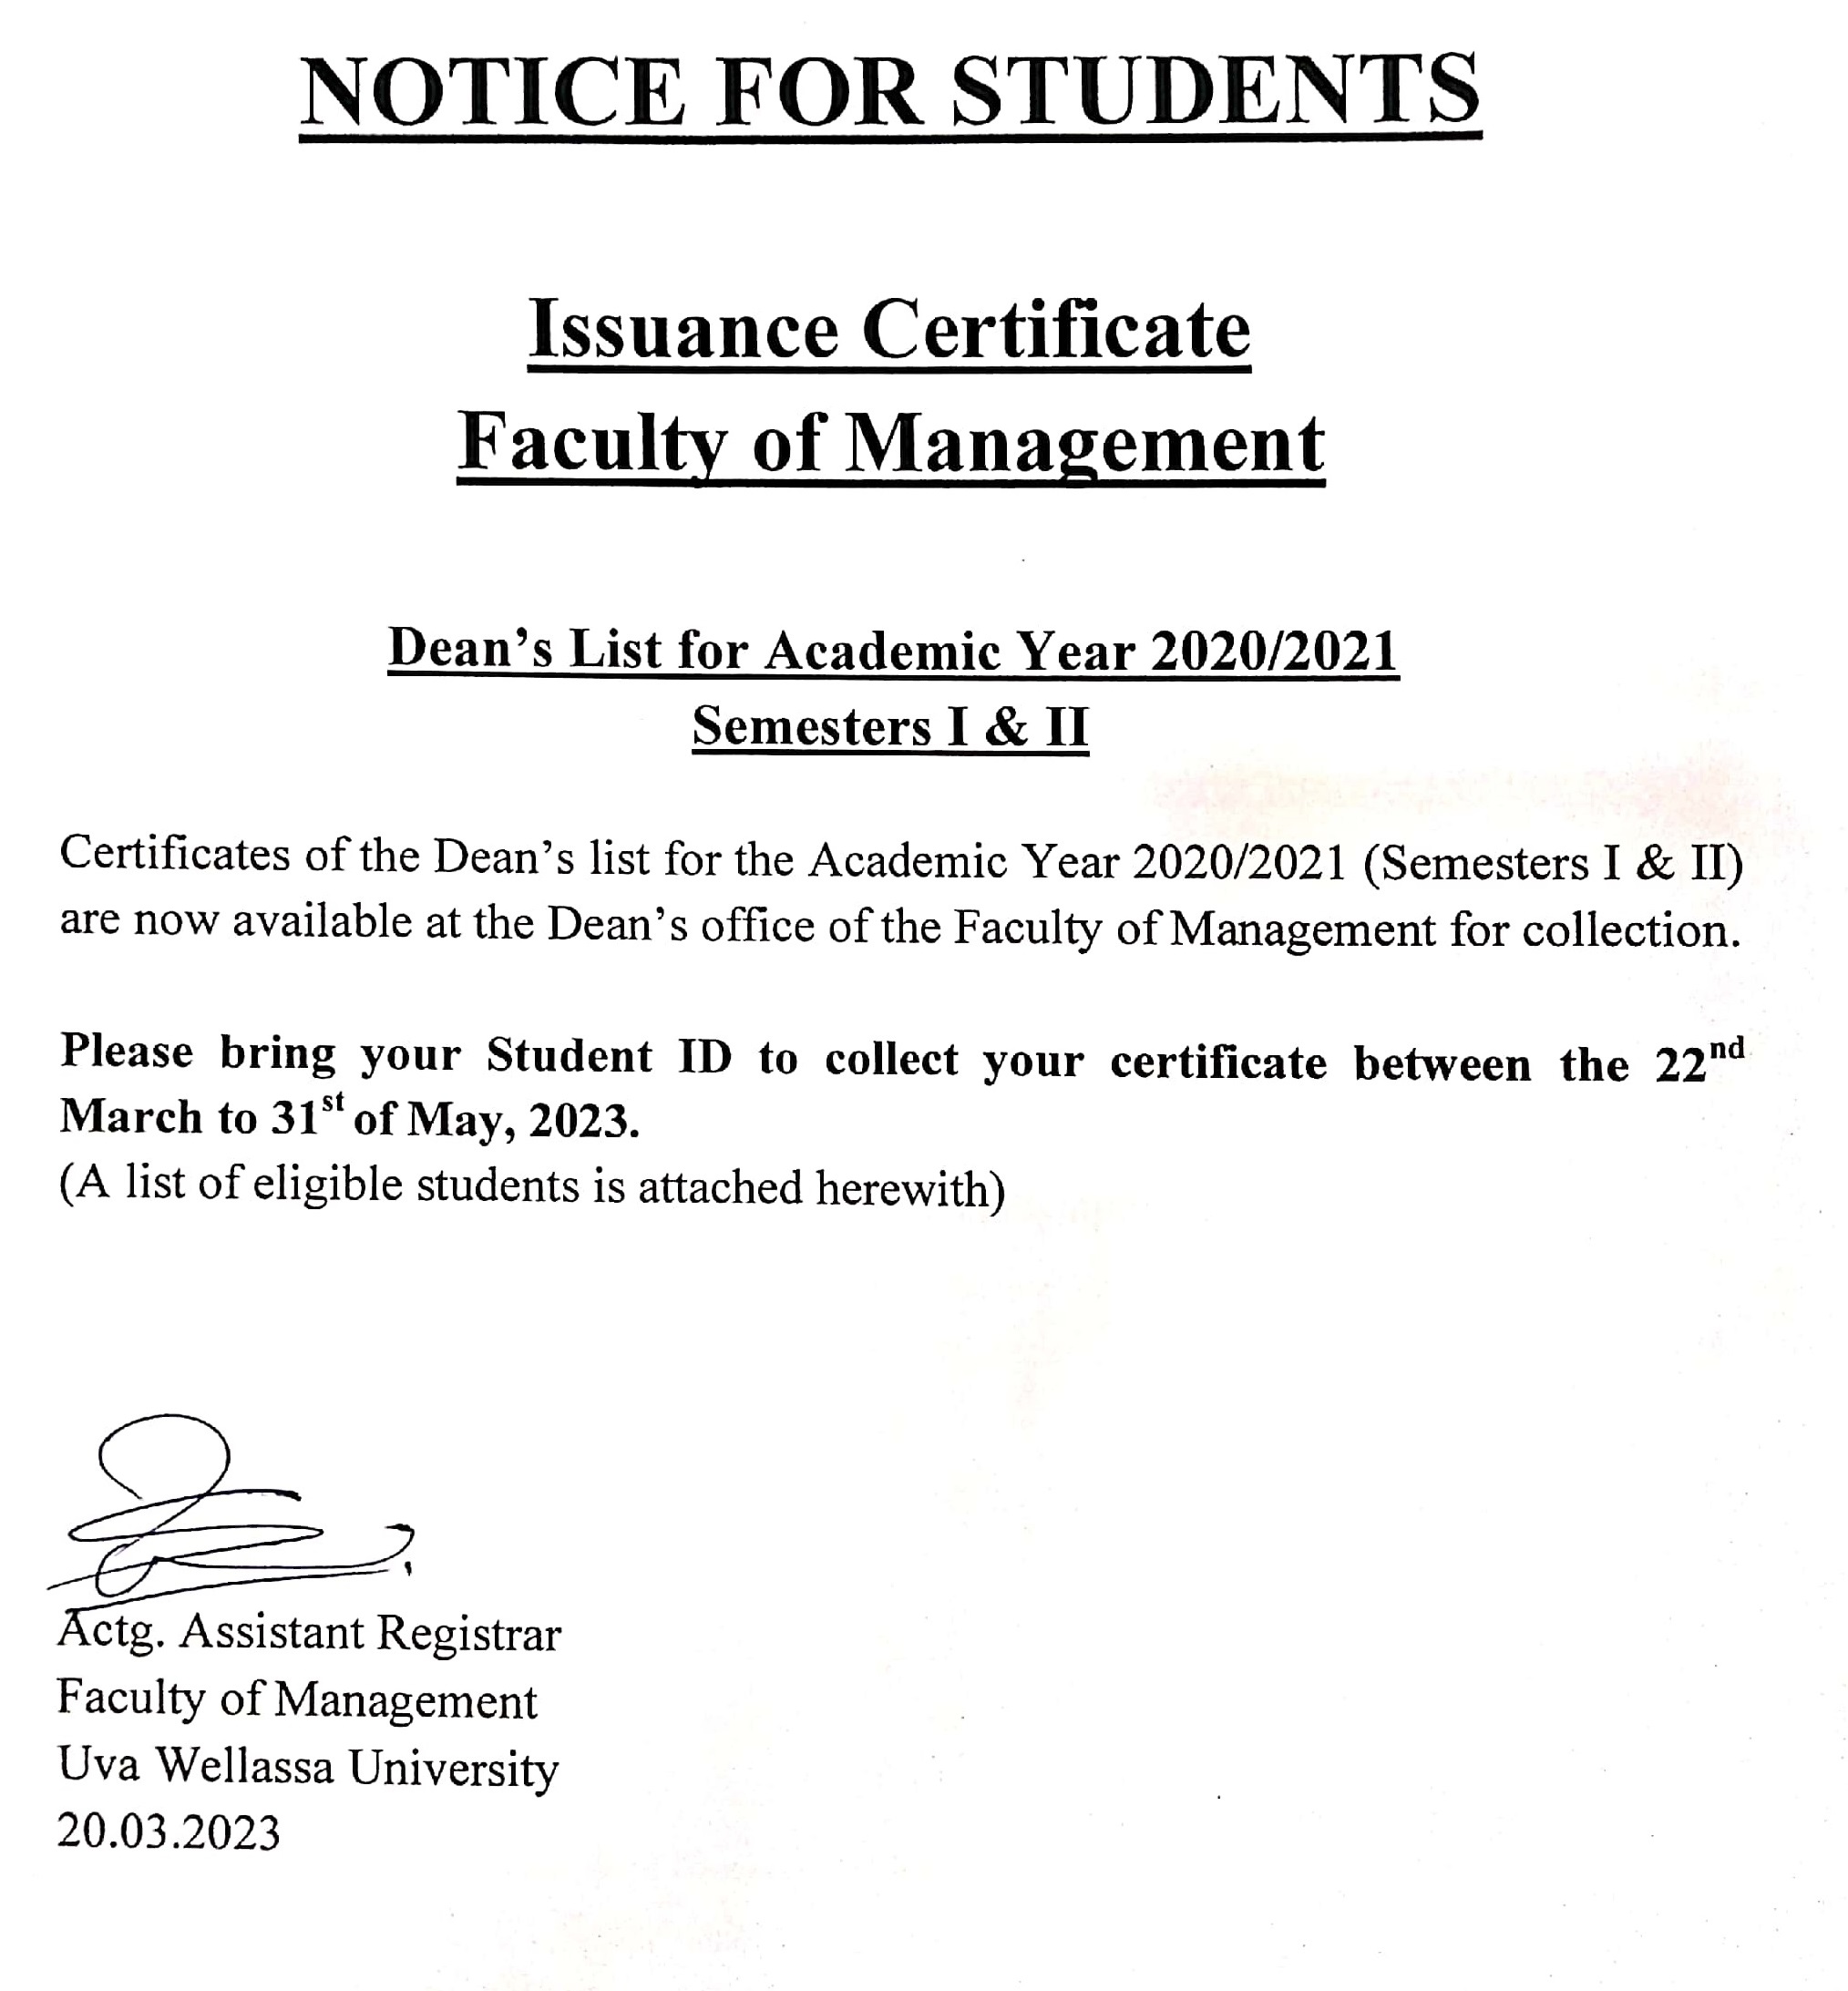 Dean’s List Certificates FOM